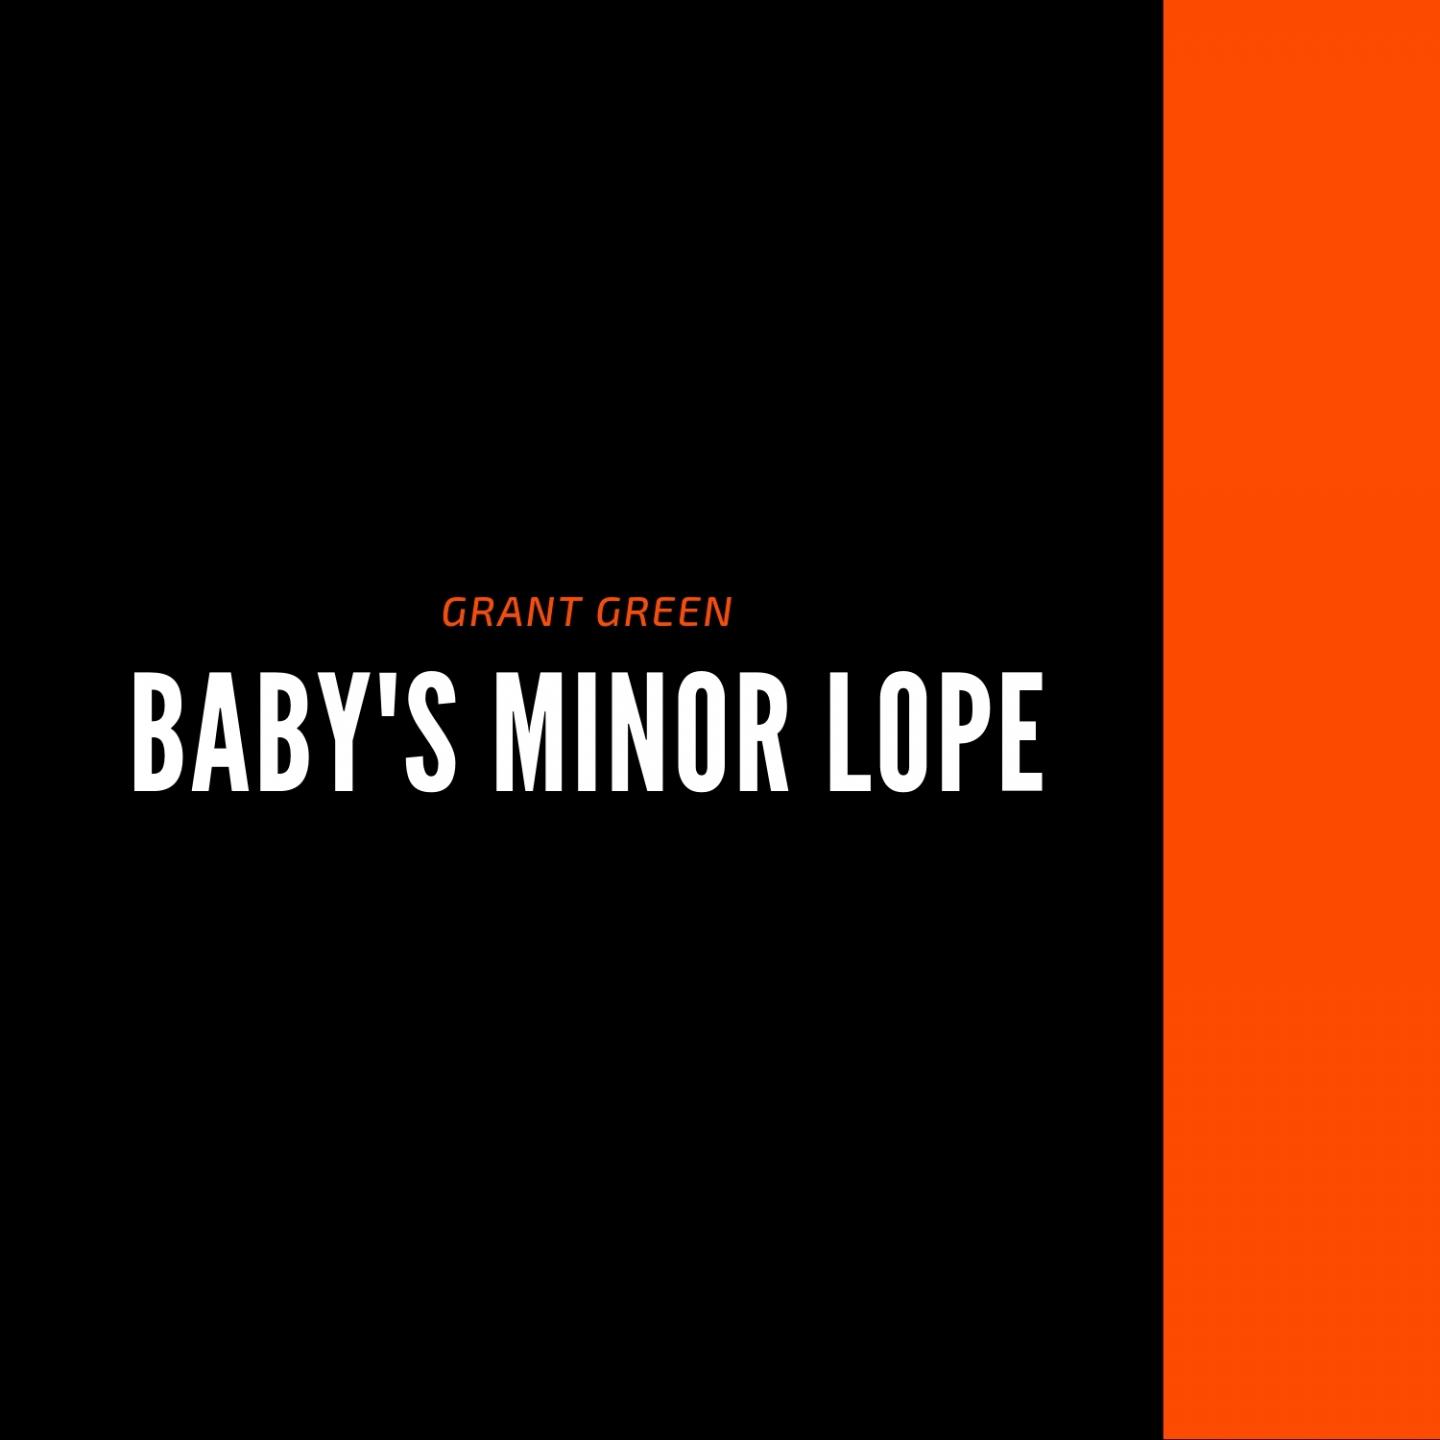 Baby's Minor Lope